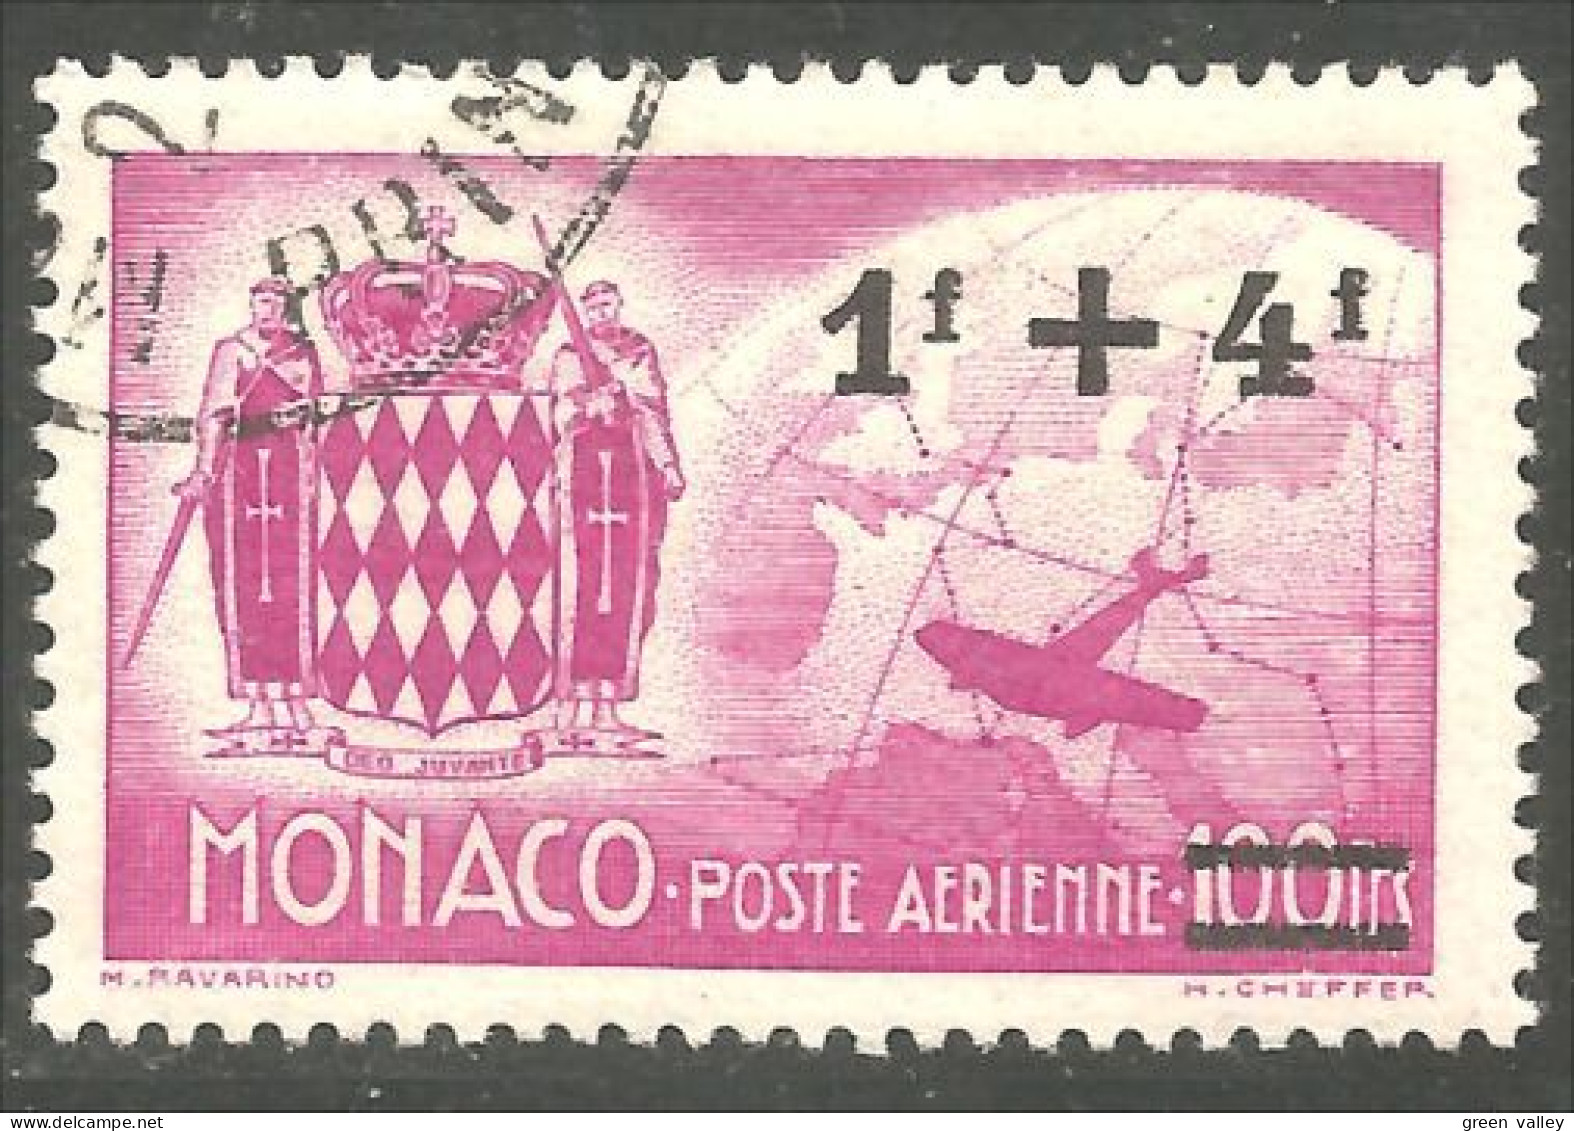 630x Monaco Armoiries Coat Of Arms Surcharge (MON-585) - Stamps